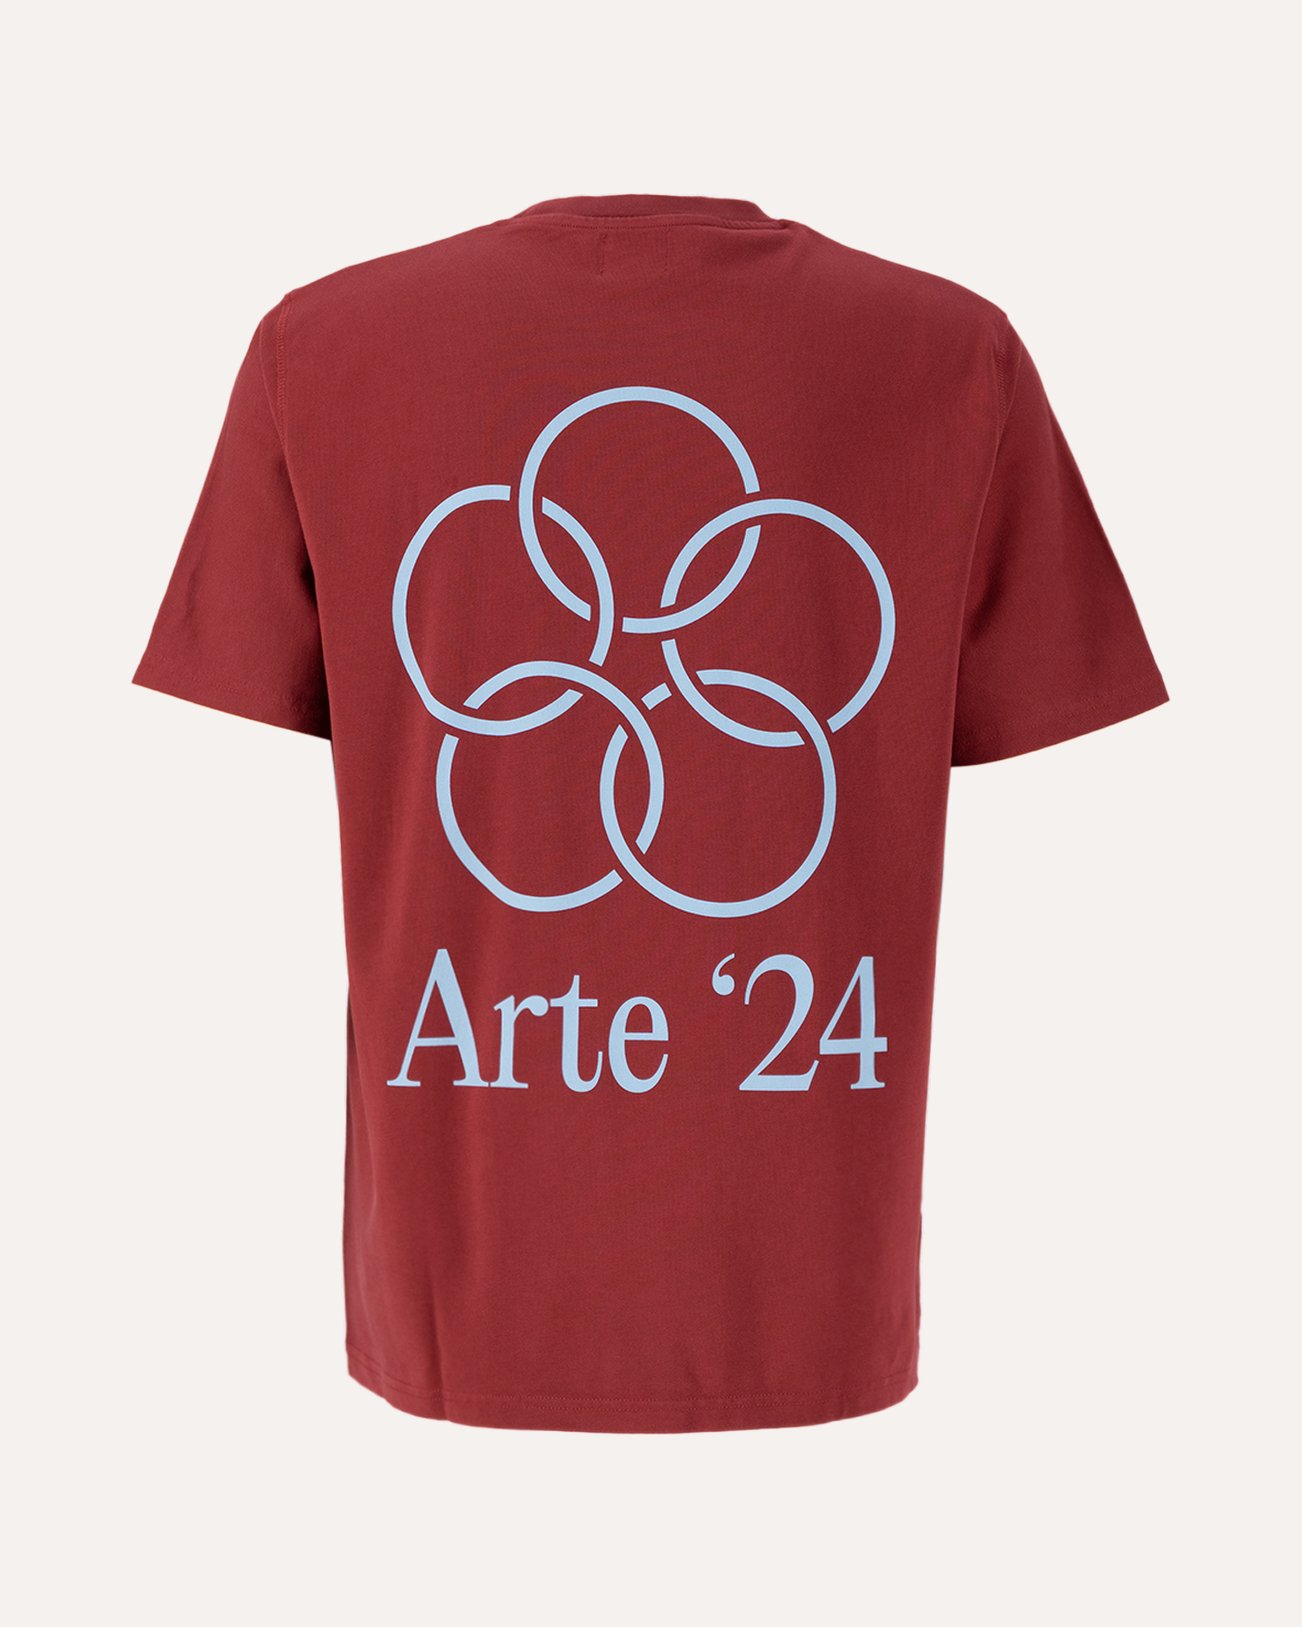 Arte Antwerp Teo Back Rings T-Shirt BORDEAUX 1